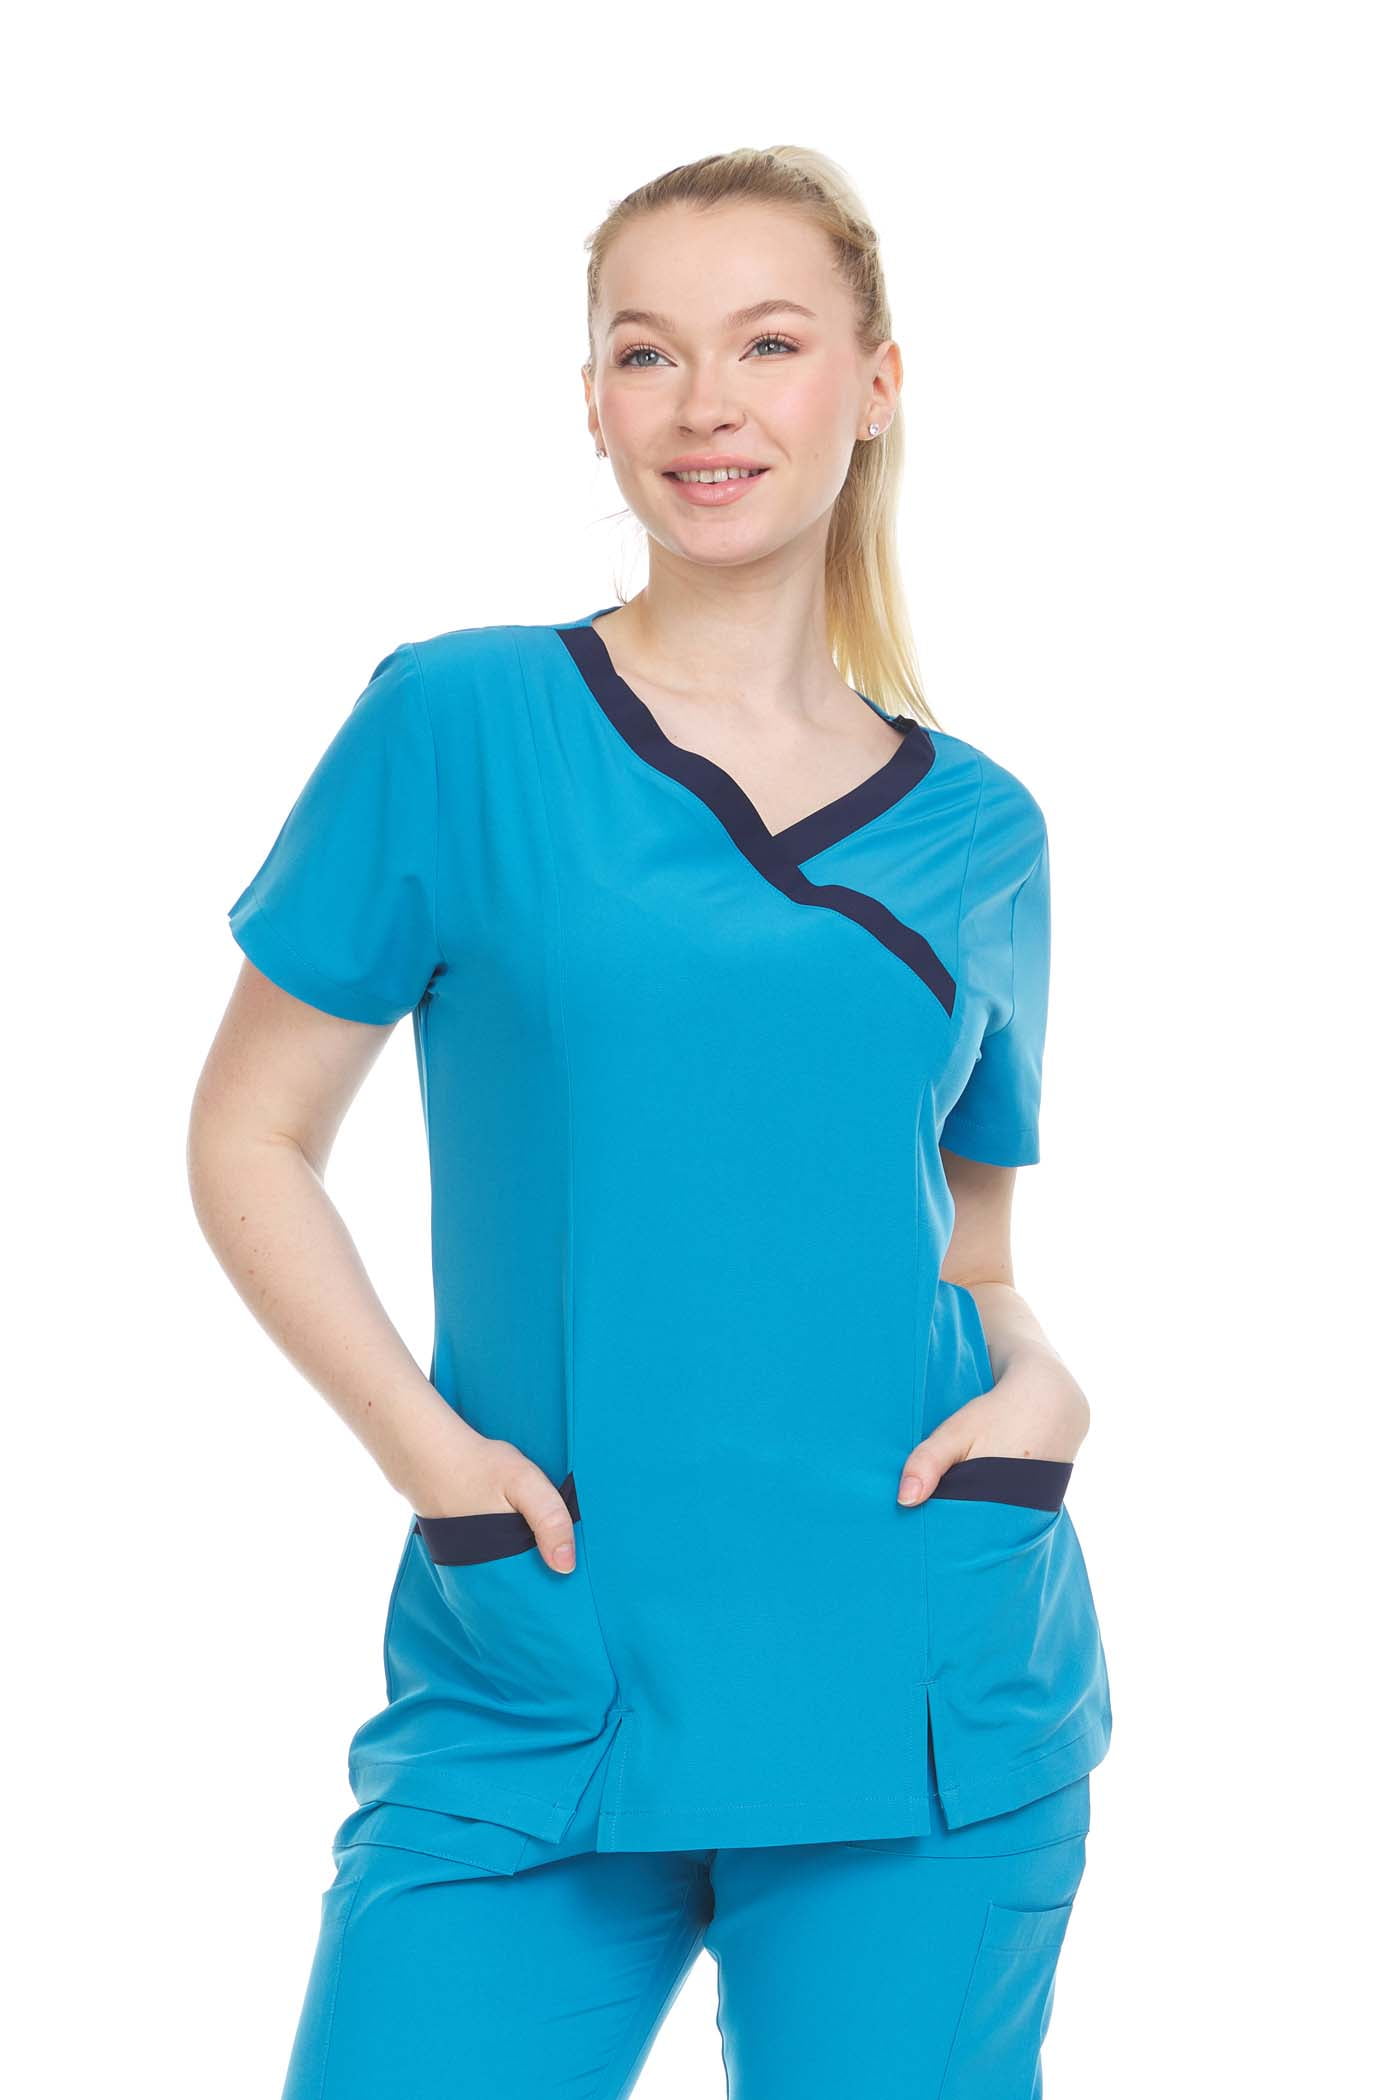 Green Town Women's Scrub Jumpsuit Medical Nursing Uniform-Wine-XX